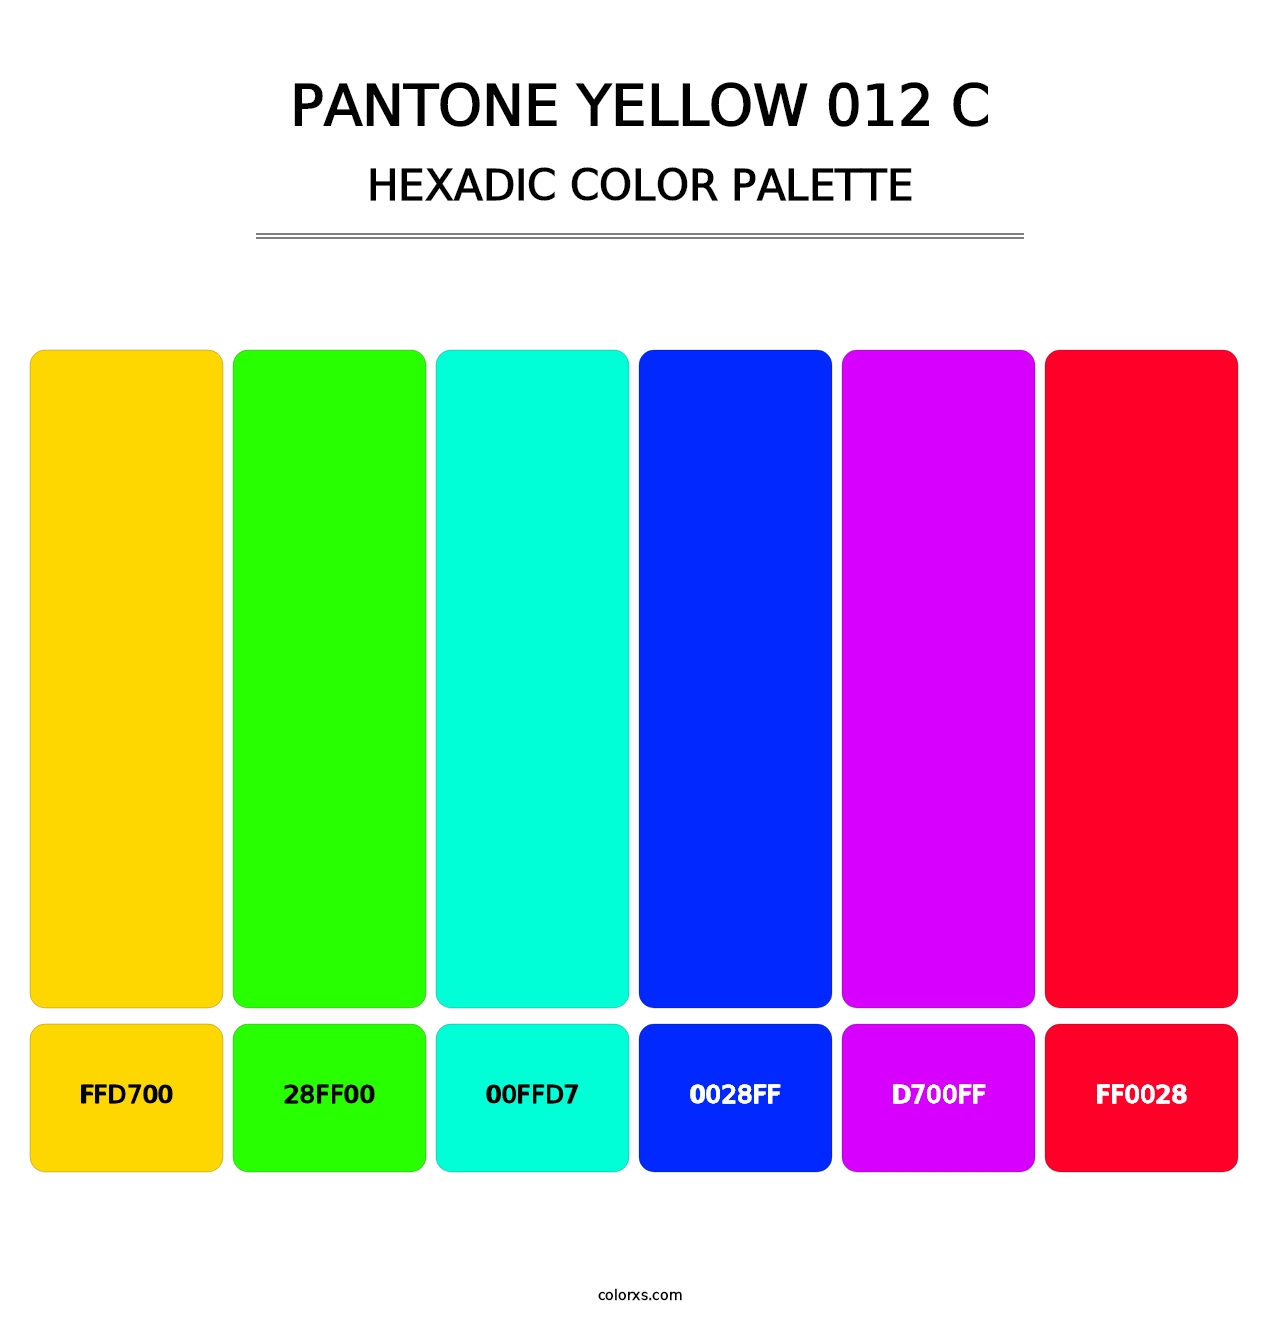 PANTONE Yellow 012 C - Hexadic Color Palette